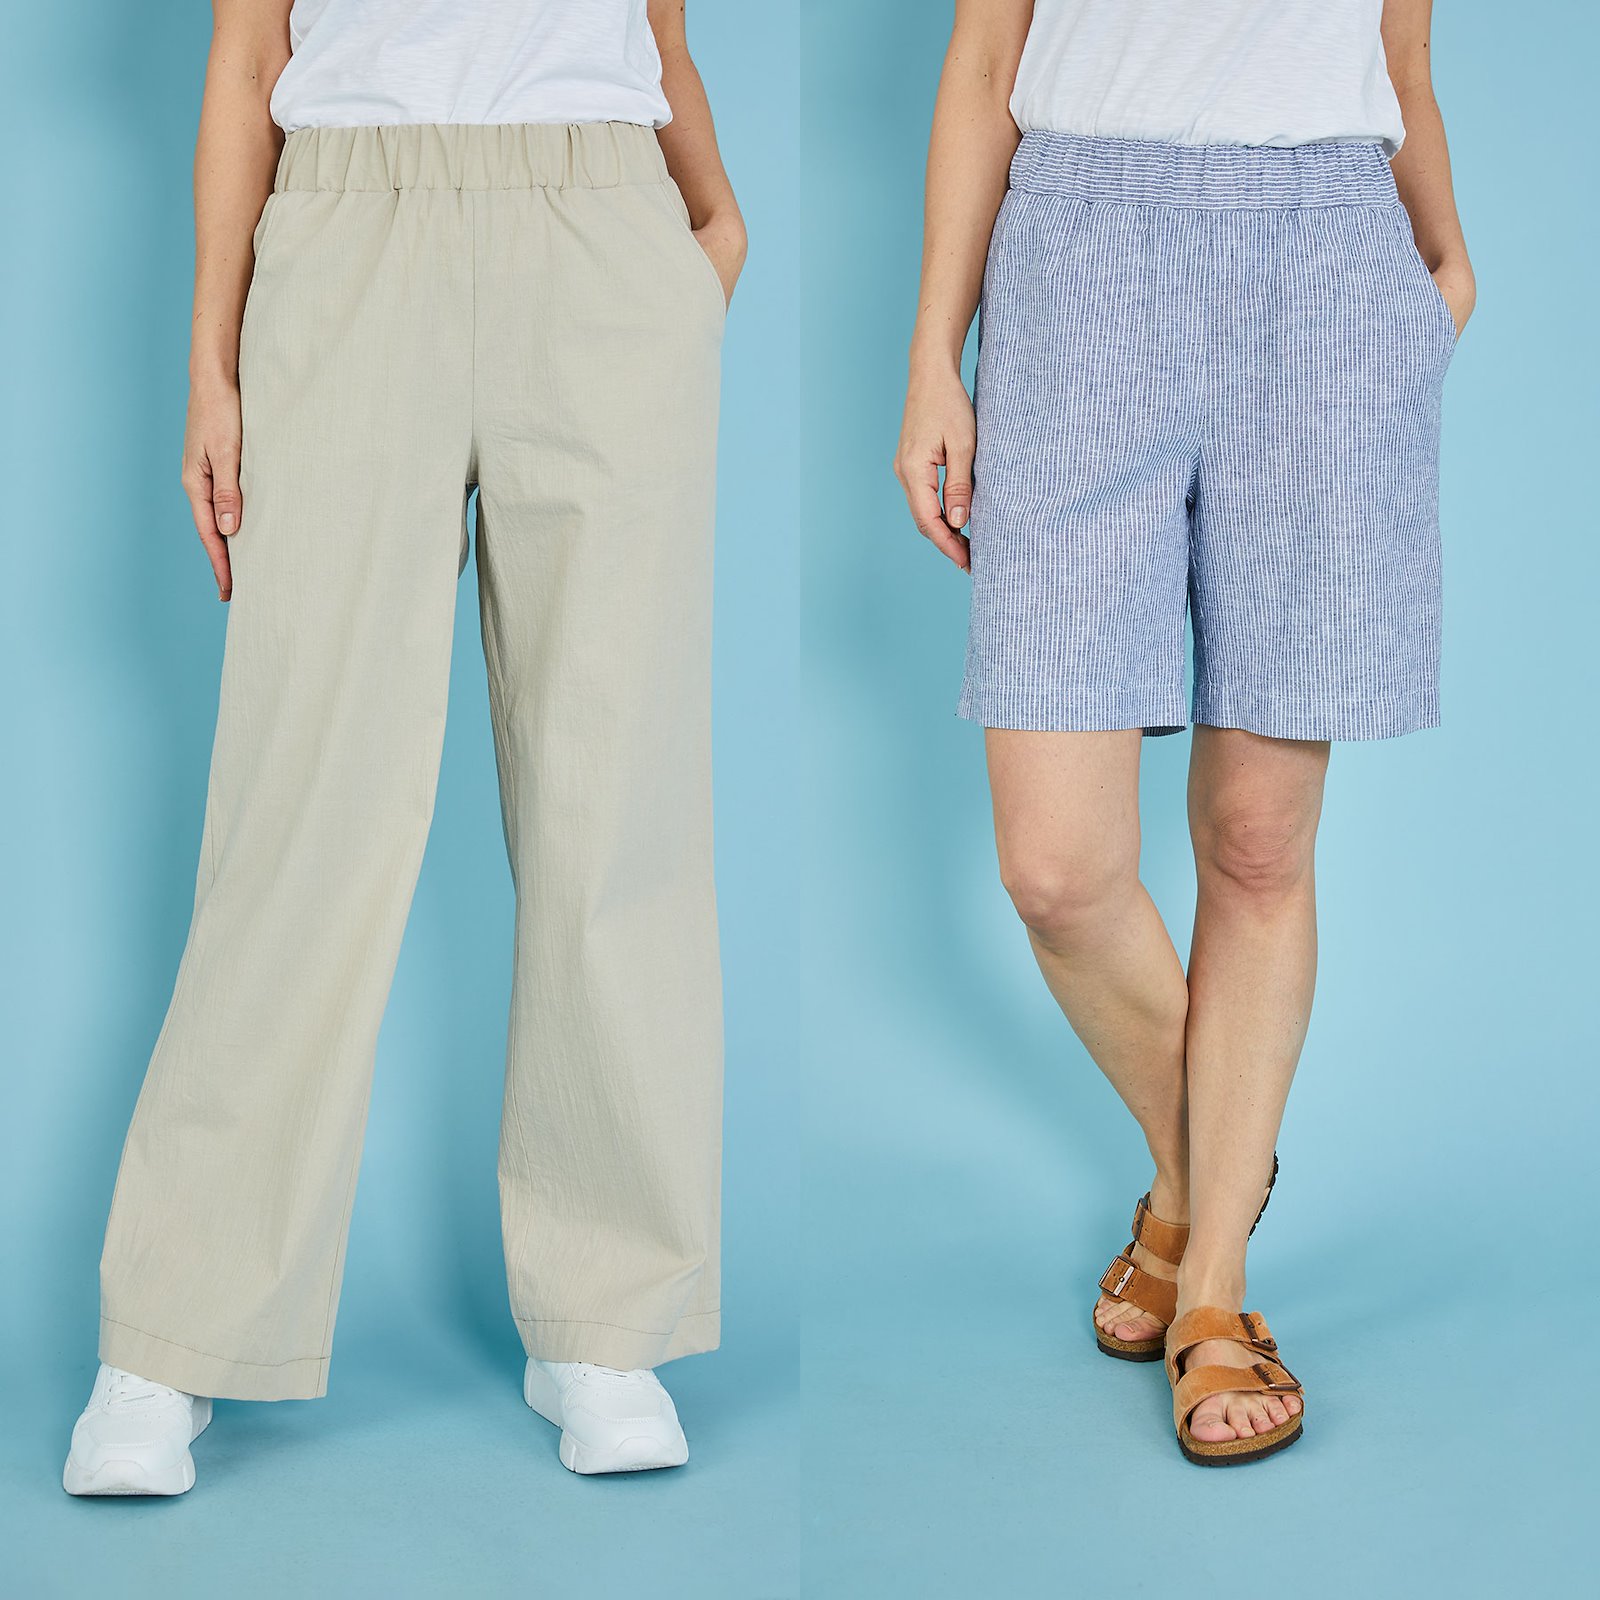 Wide trousers/shorts w. pockets, 42/14 p20061000_p20061001_p20061002_p20061003_p20061004_sskit